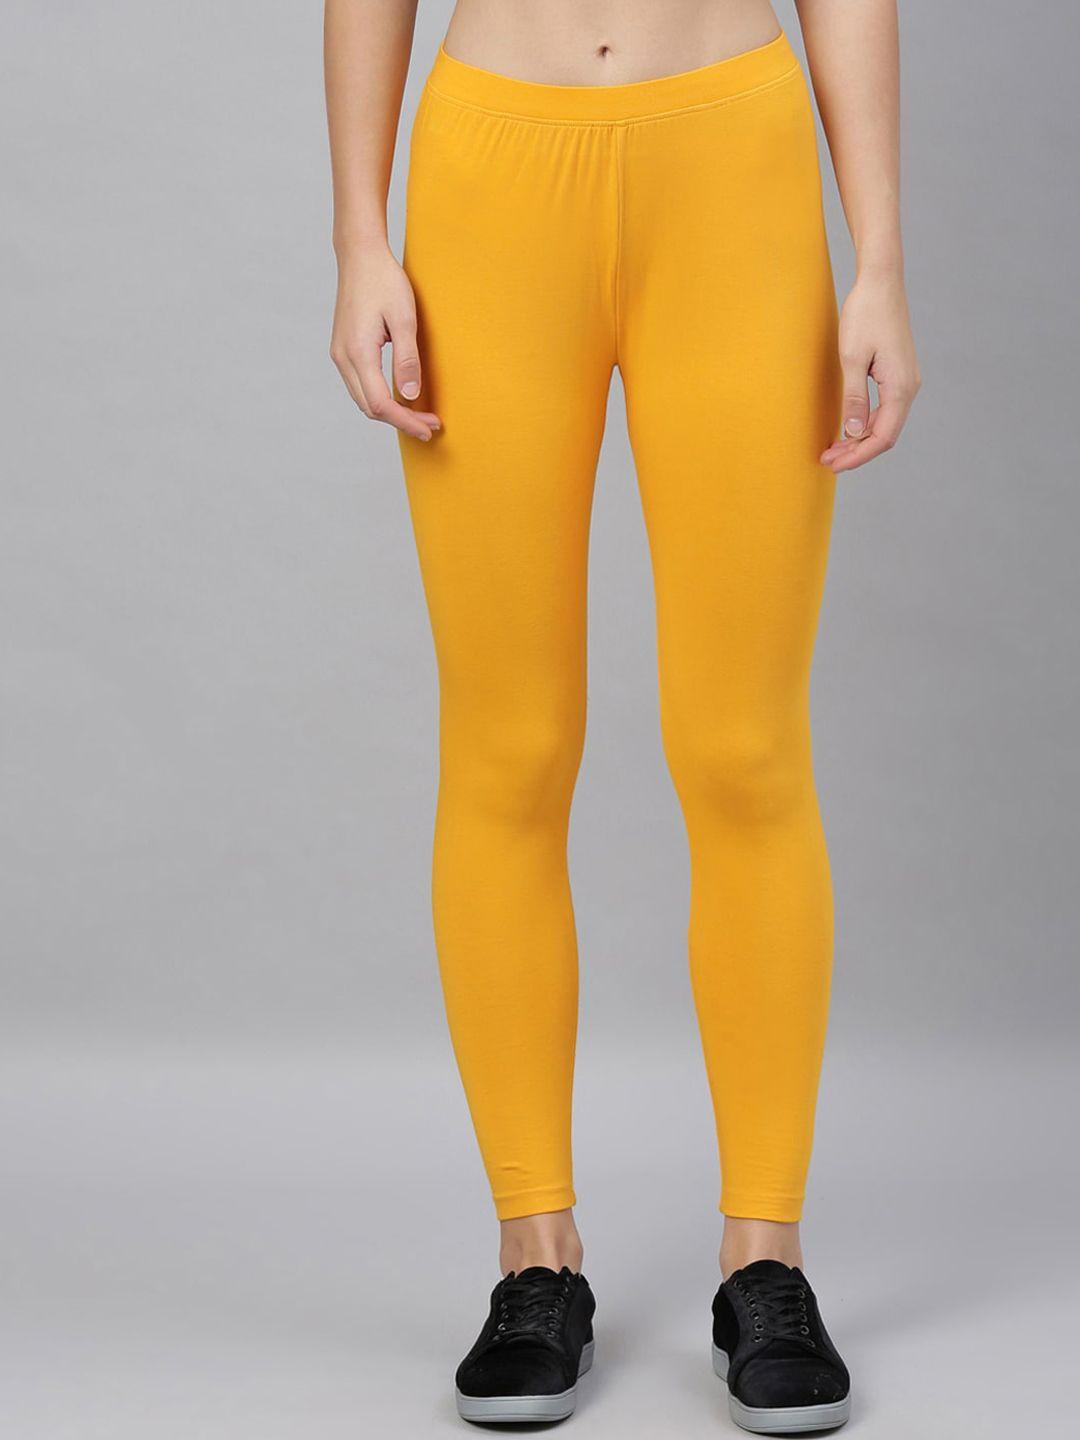 kryptic women yellow solid ankle length leggings